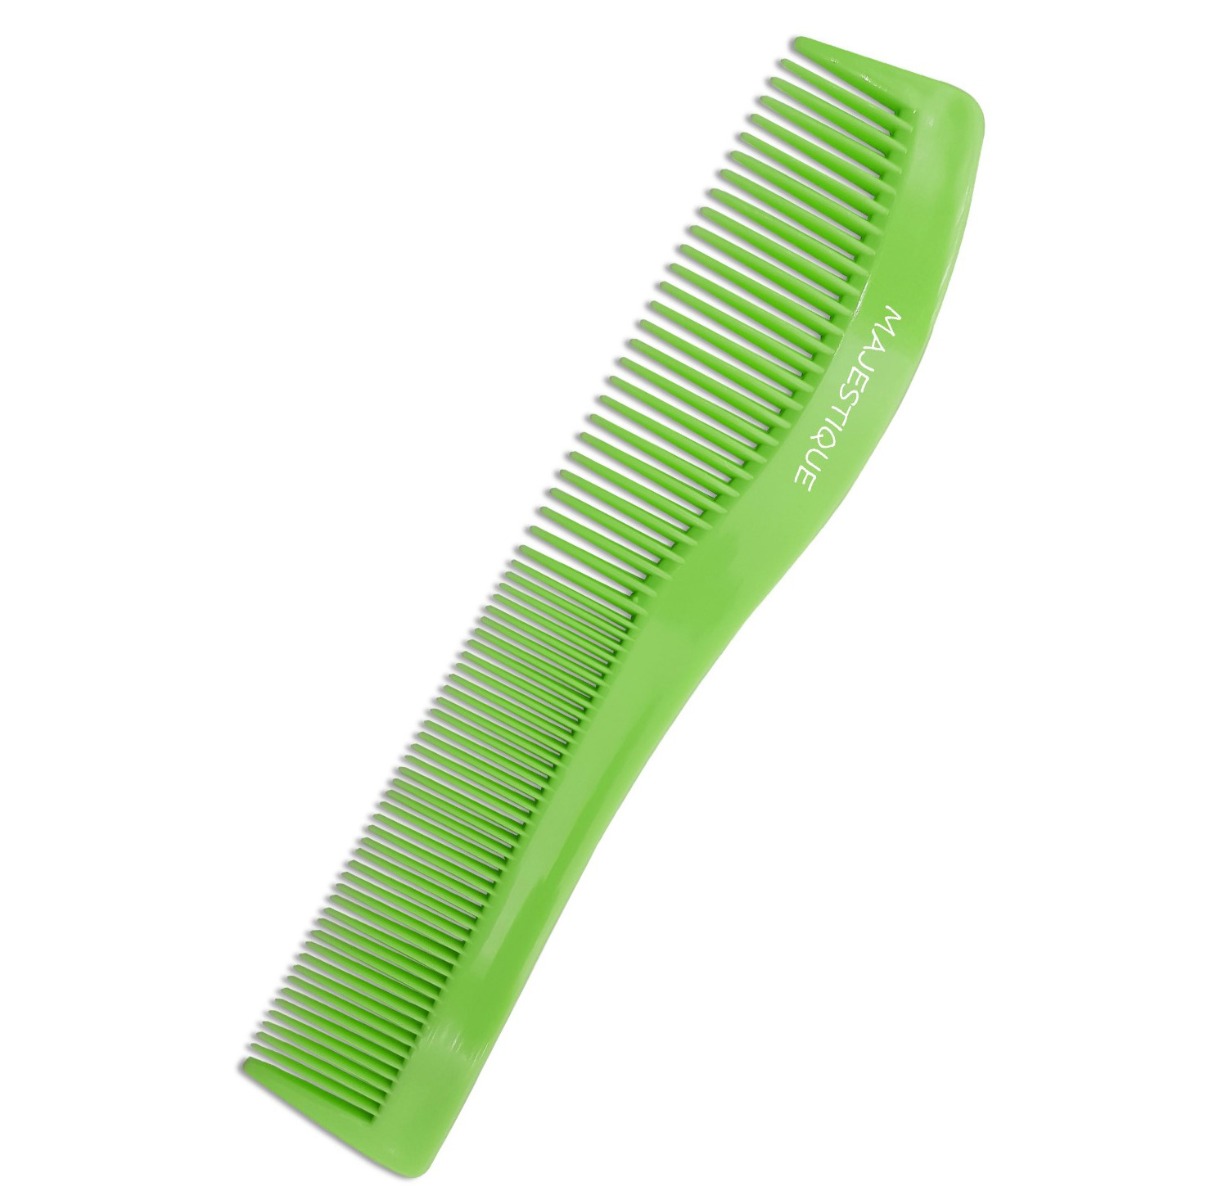 Majestique Long handle Hair Comb - Assorted, 1pc